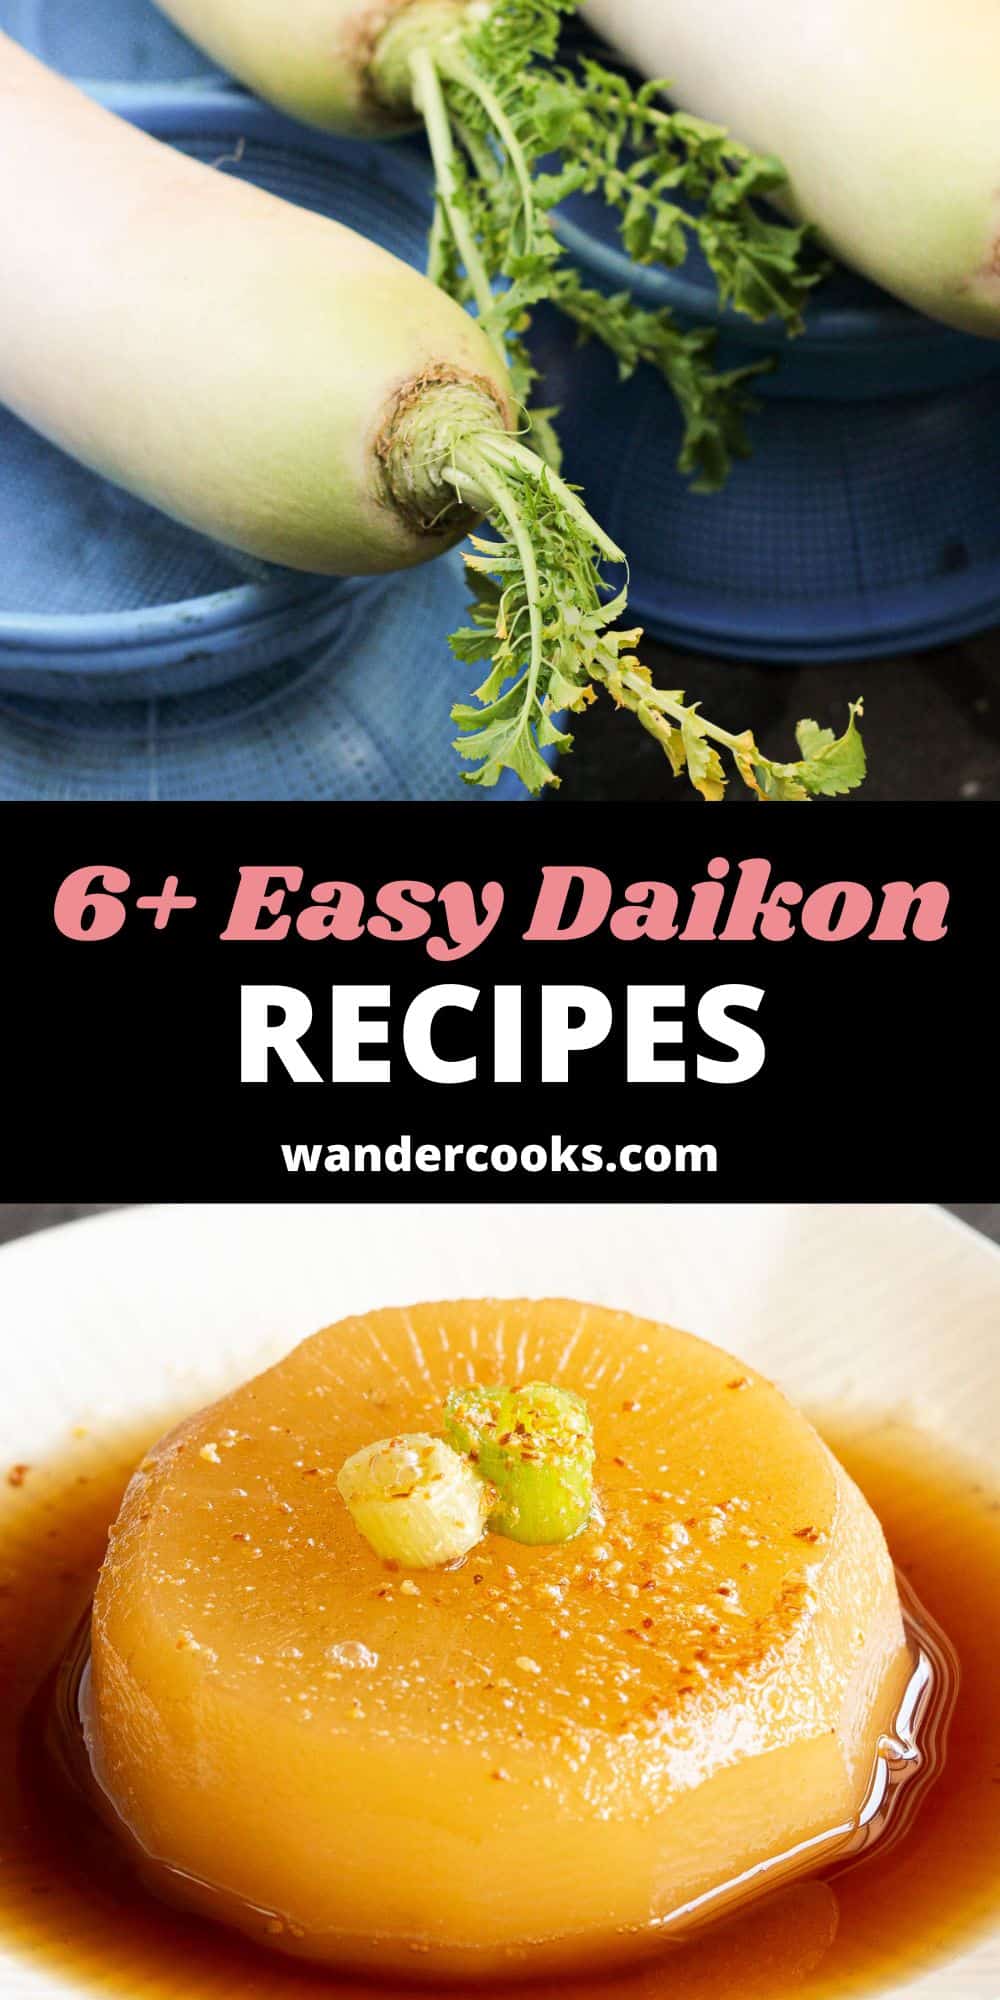 6+ Easy Daikon Recipes + More Ways to Use It